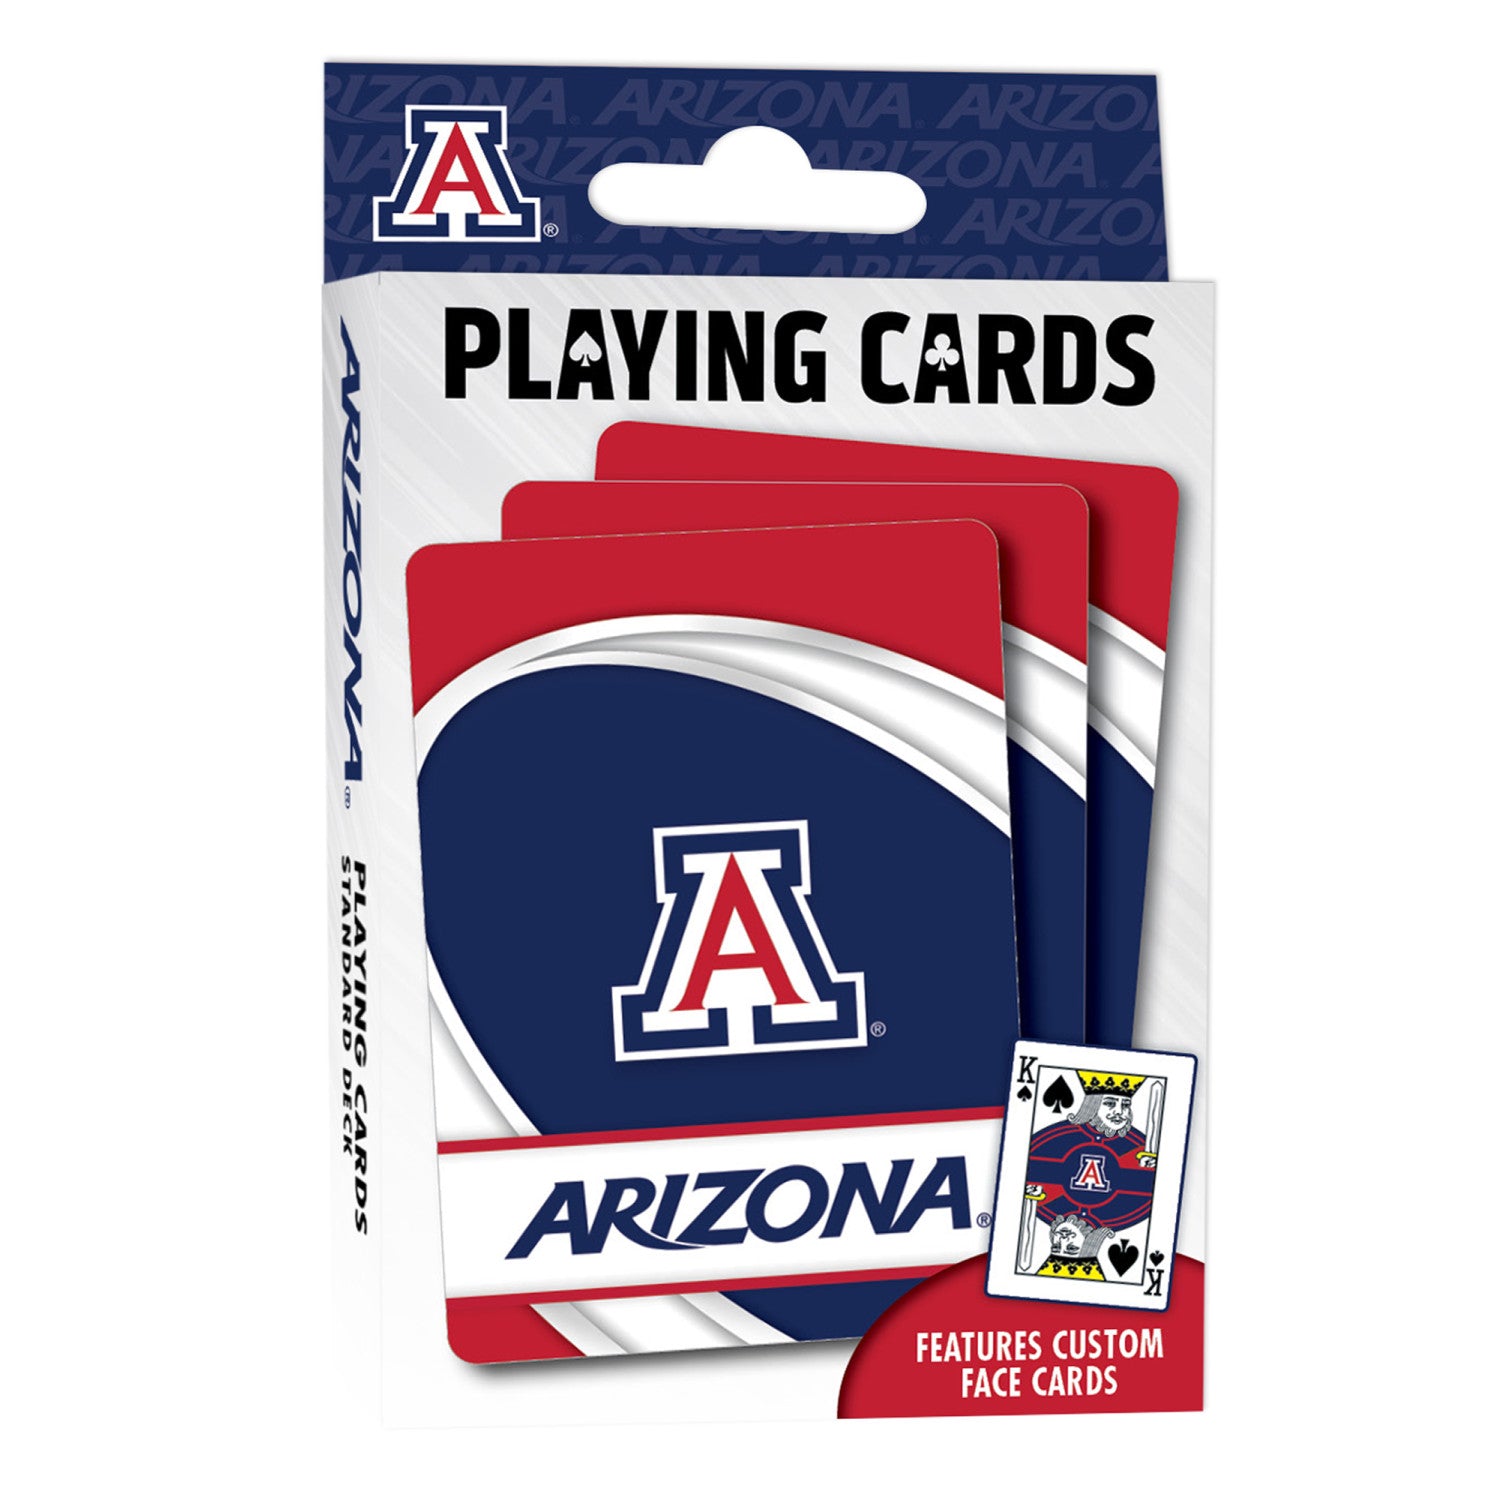 Arizona Wildcats Playing Cards - 54 Card Deck